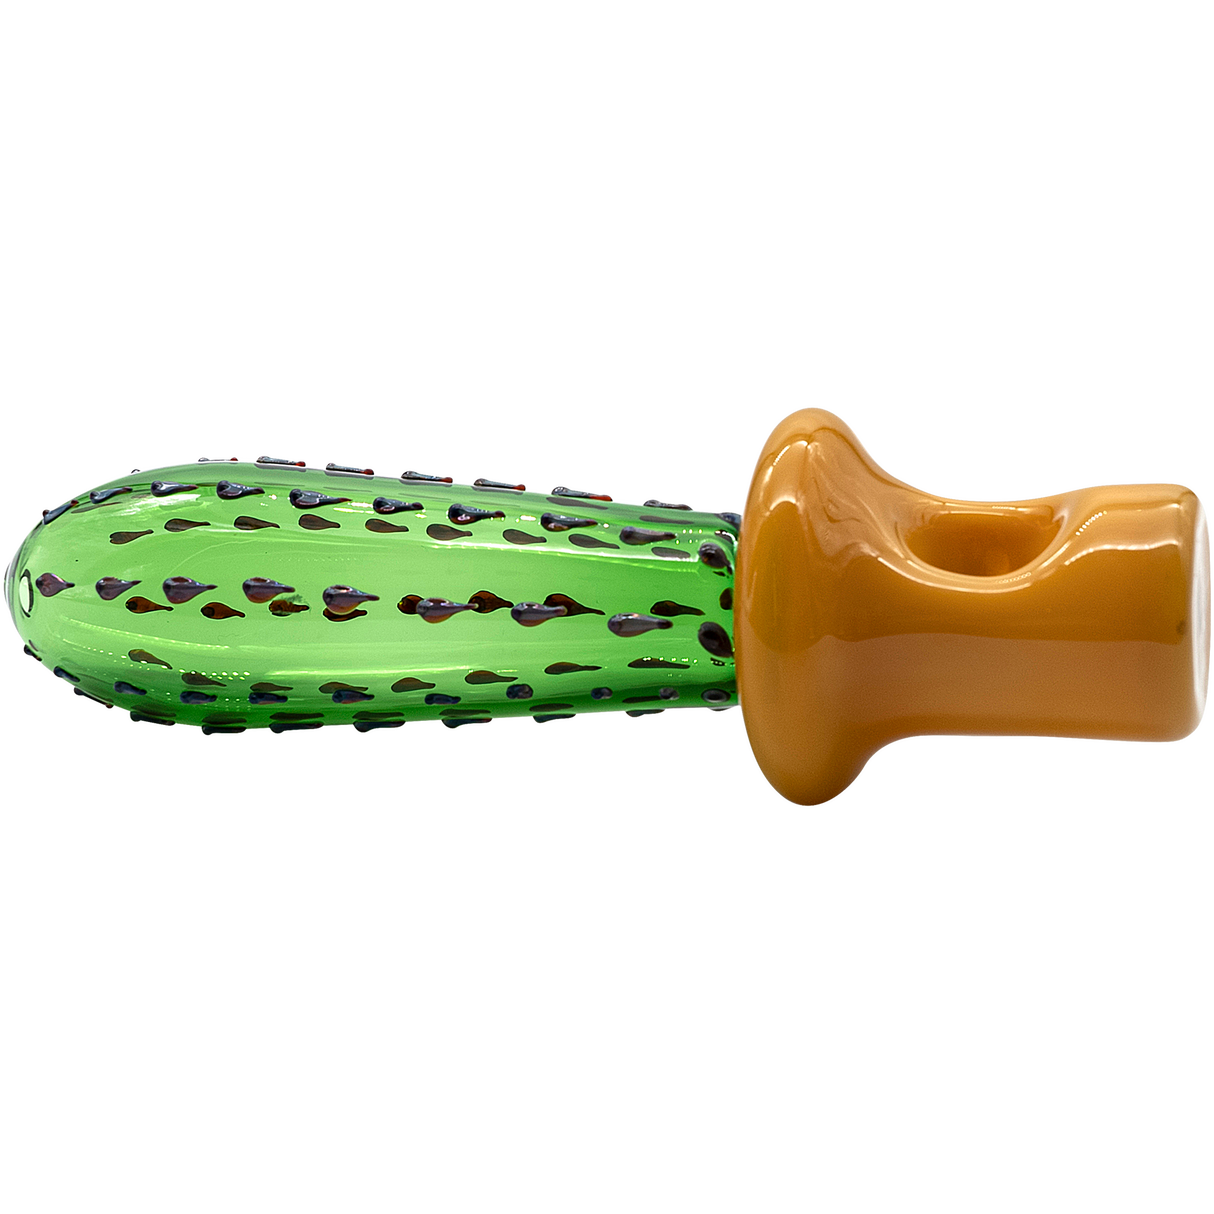 LA Pipes San Pedro Cactus Glass Pipe, green spoon design, 5" borosilicate, USA made